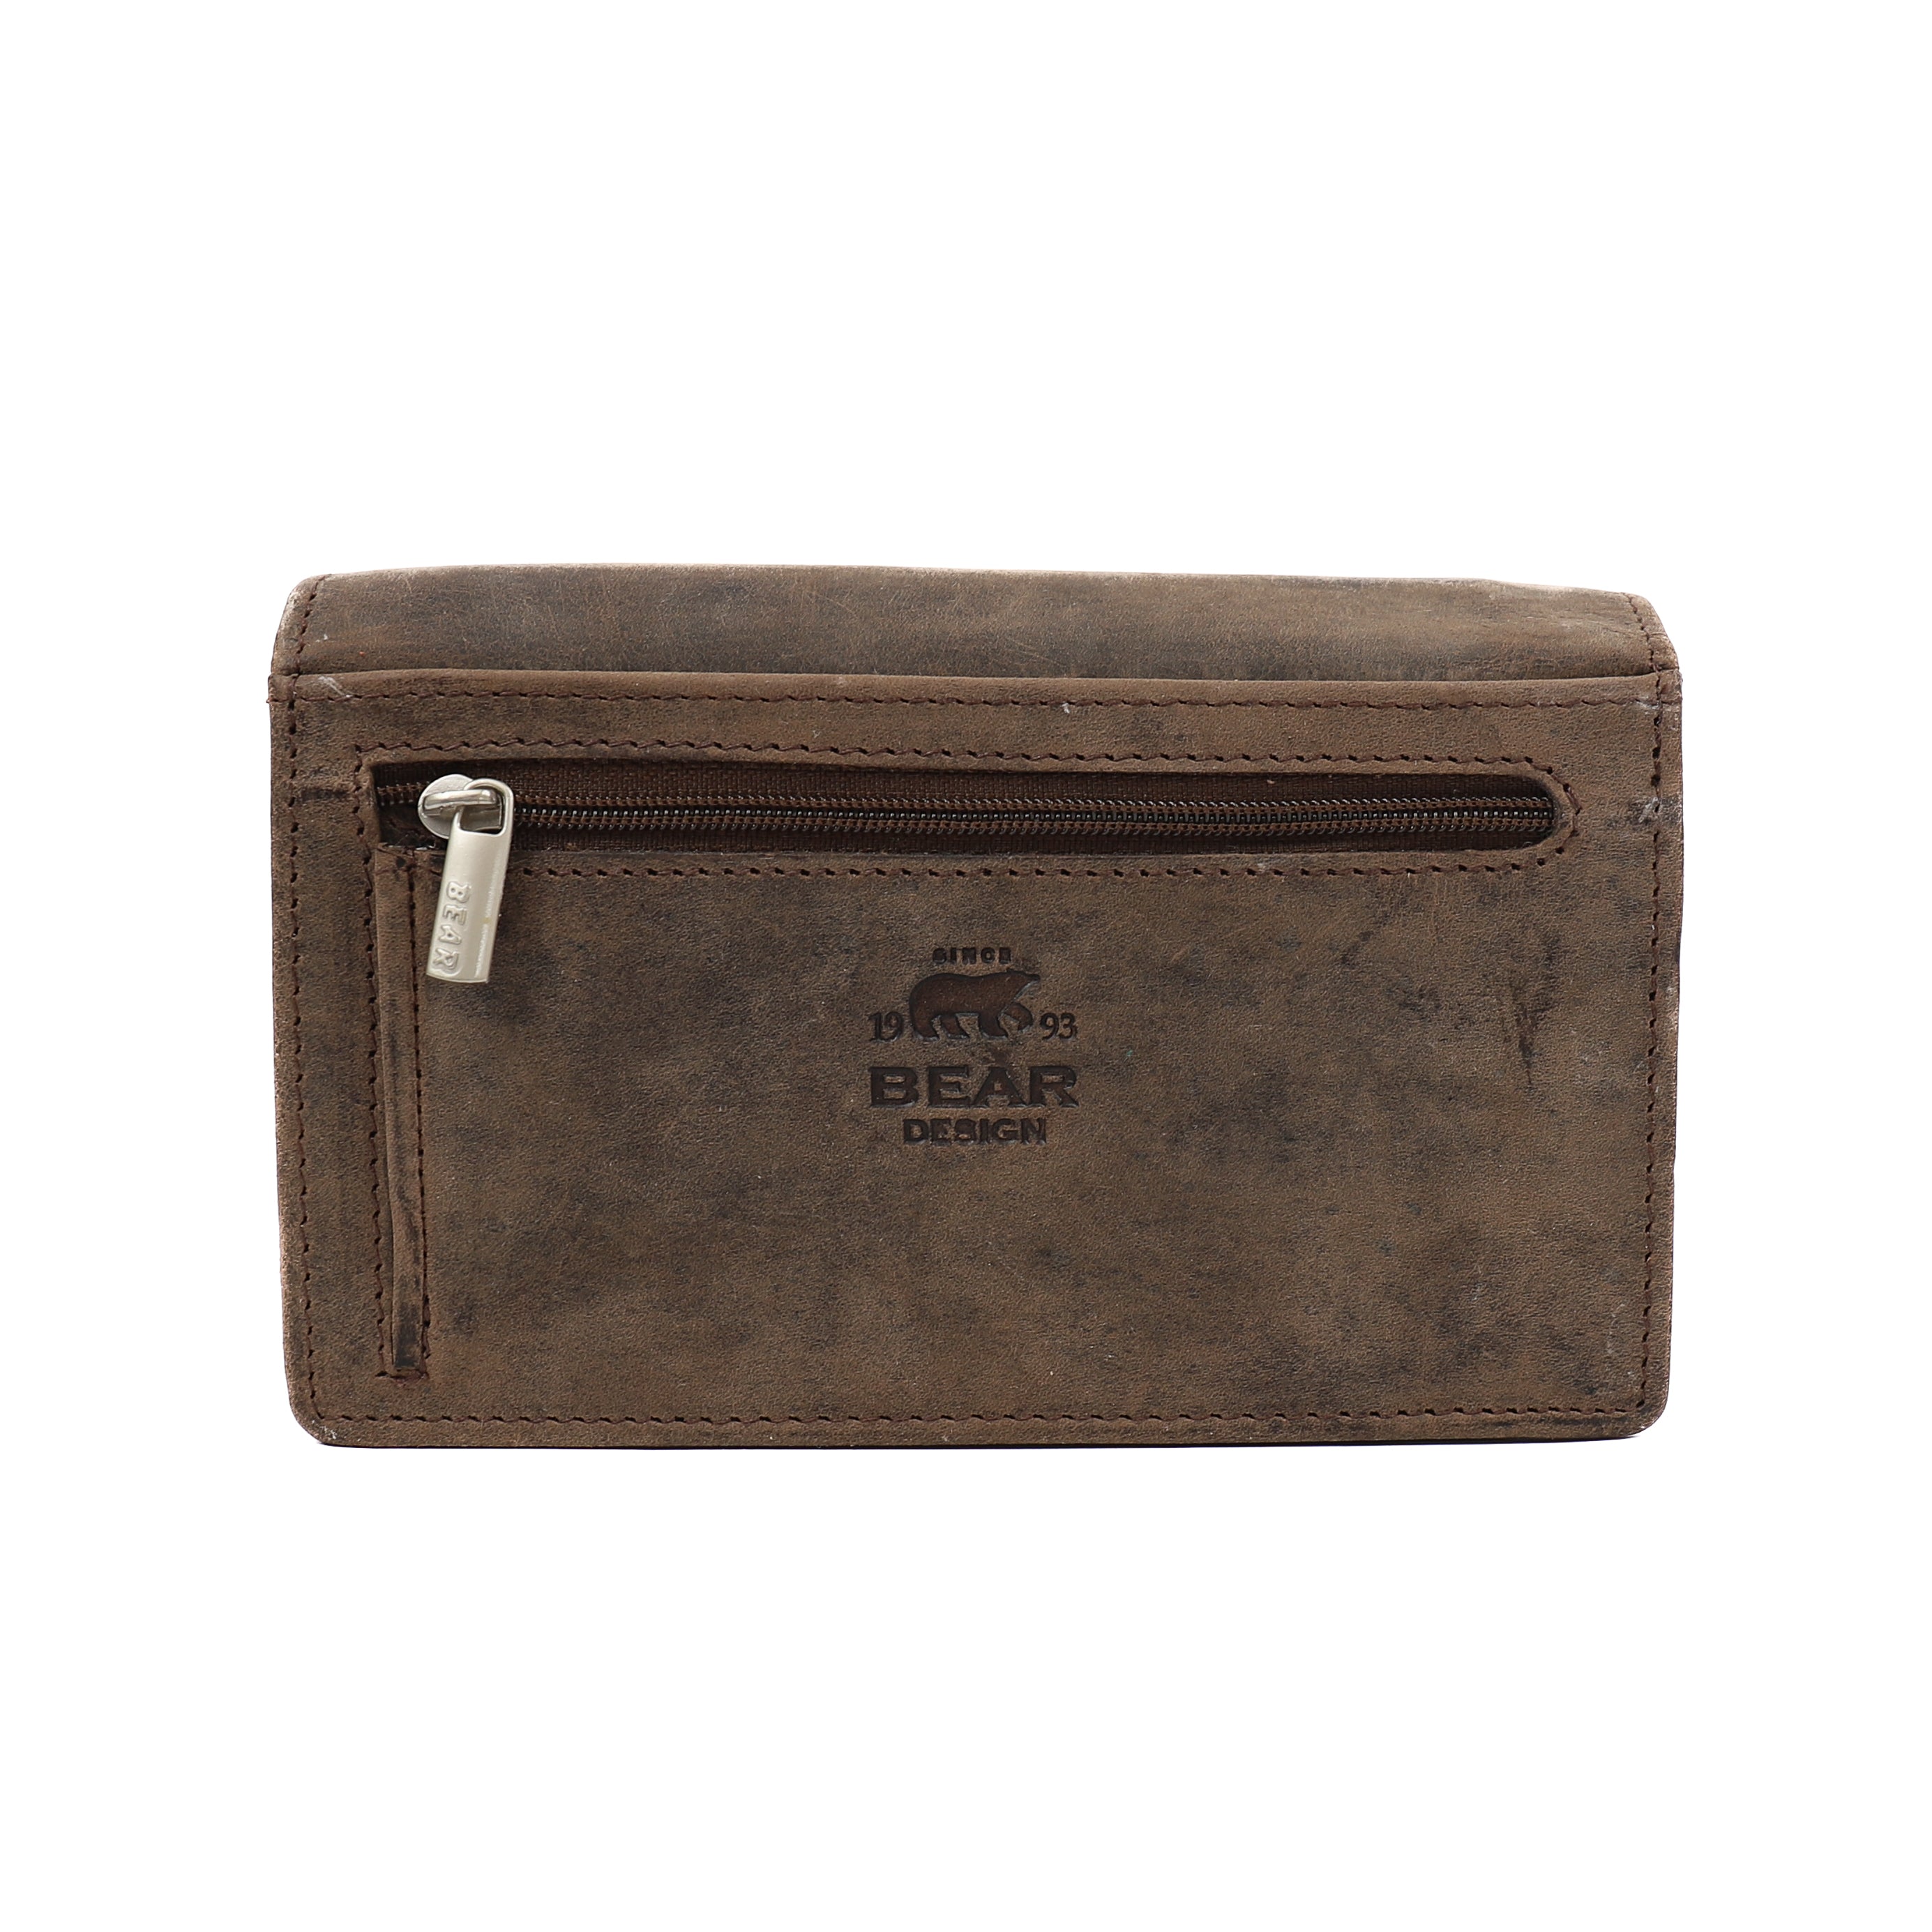 Wrap wallet 'Erica' brown - HD 9662